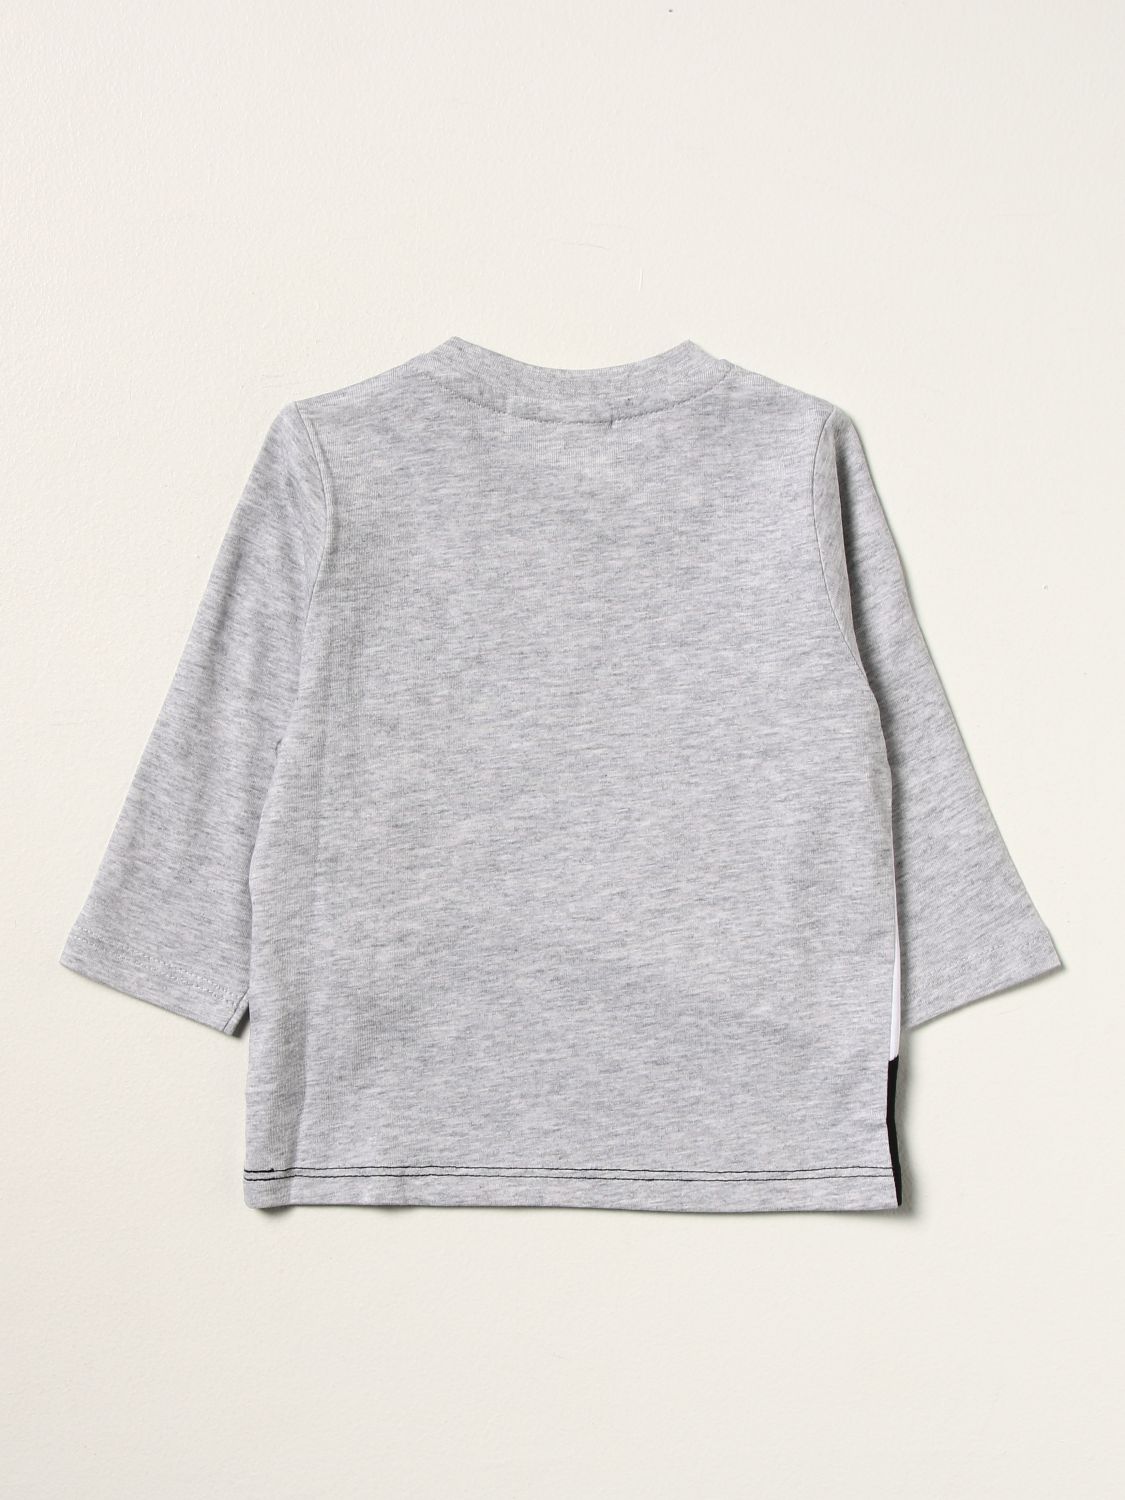 T-shirt Hugo Boss: Hugo Boss T-shirt in stretch cotton with logo grey 2